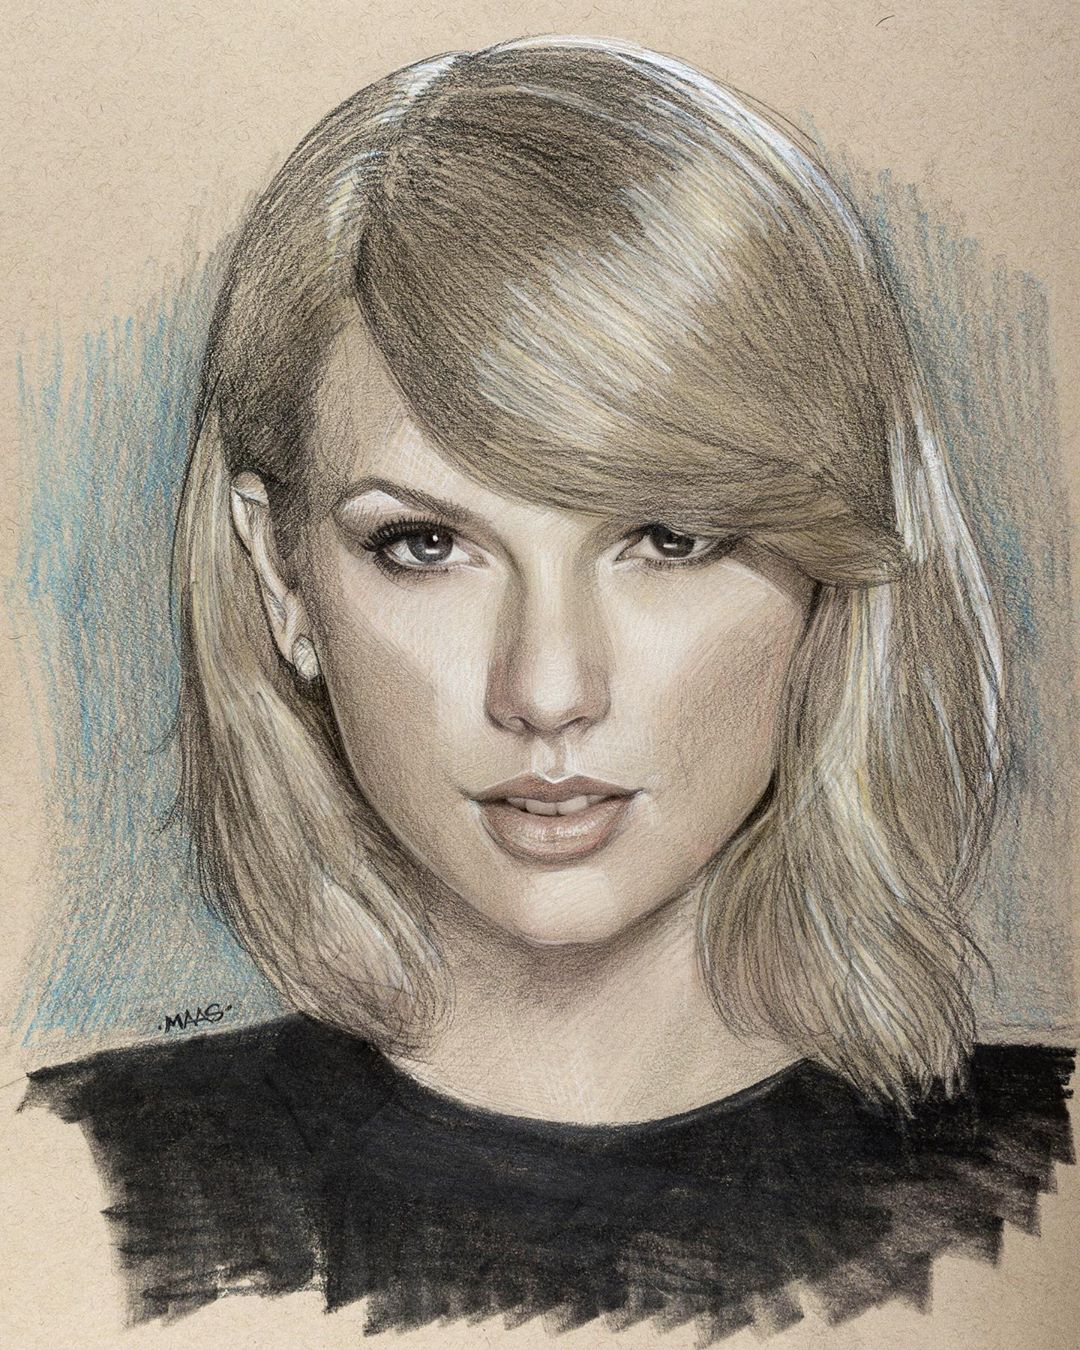 Singer Taylor Swift Drawing